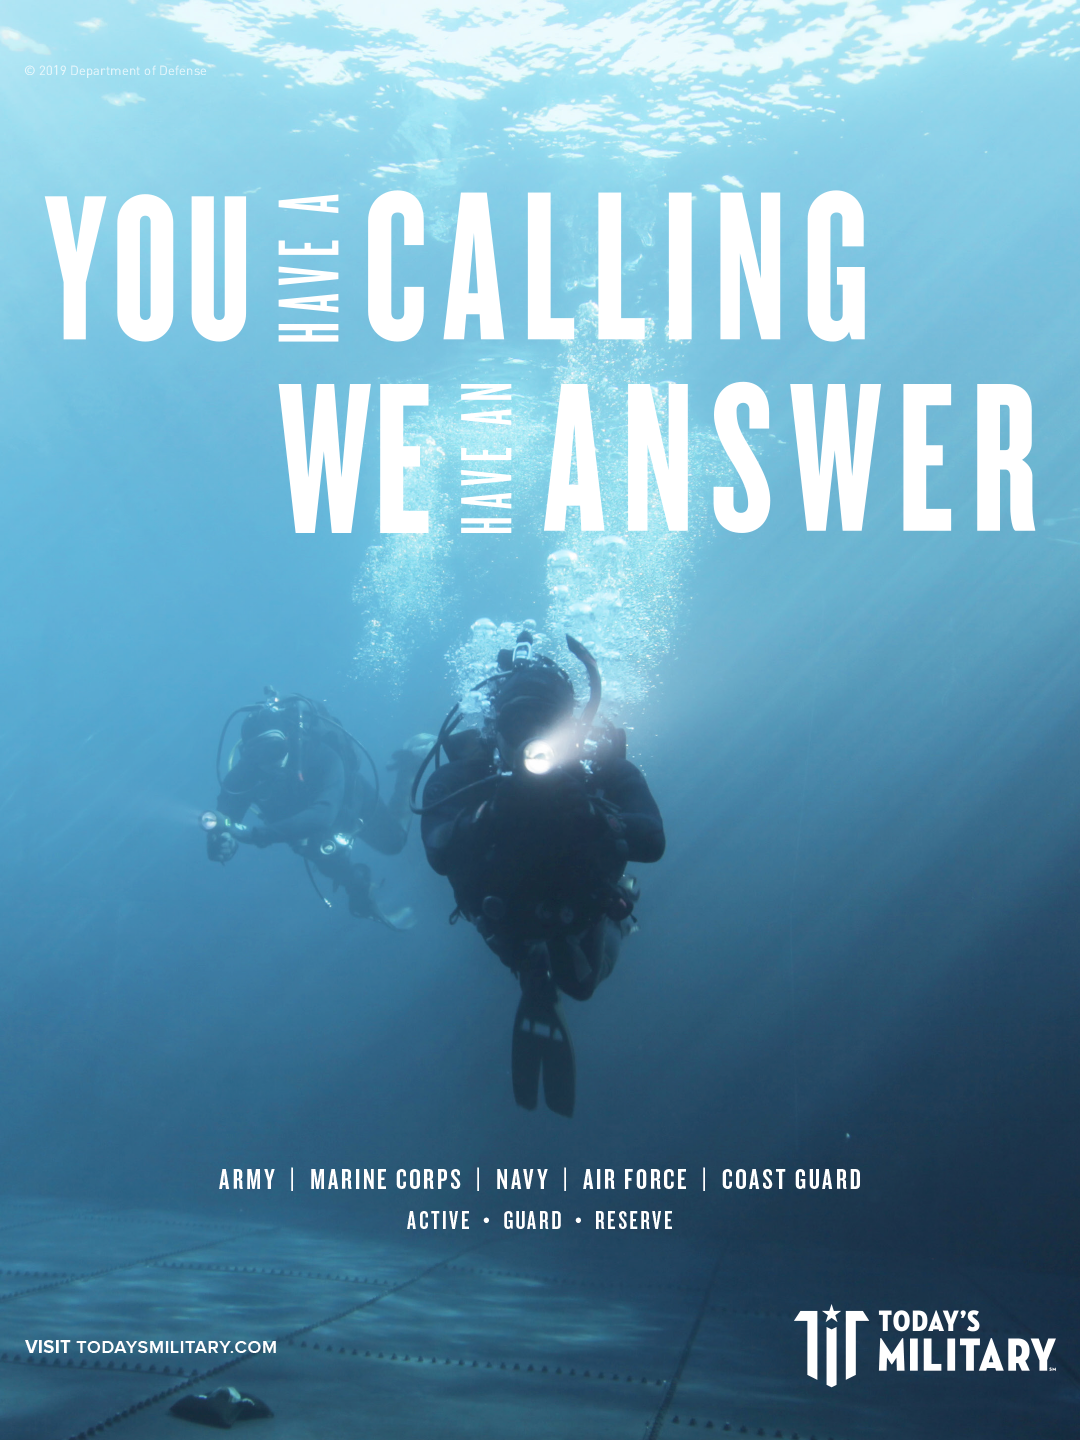 Print ad with military member diving in ocean